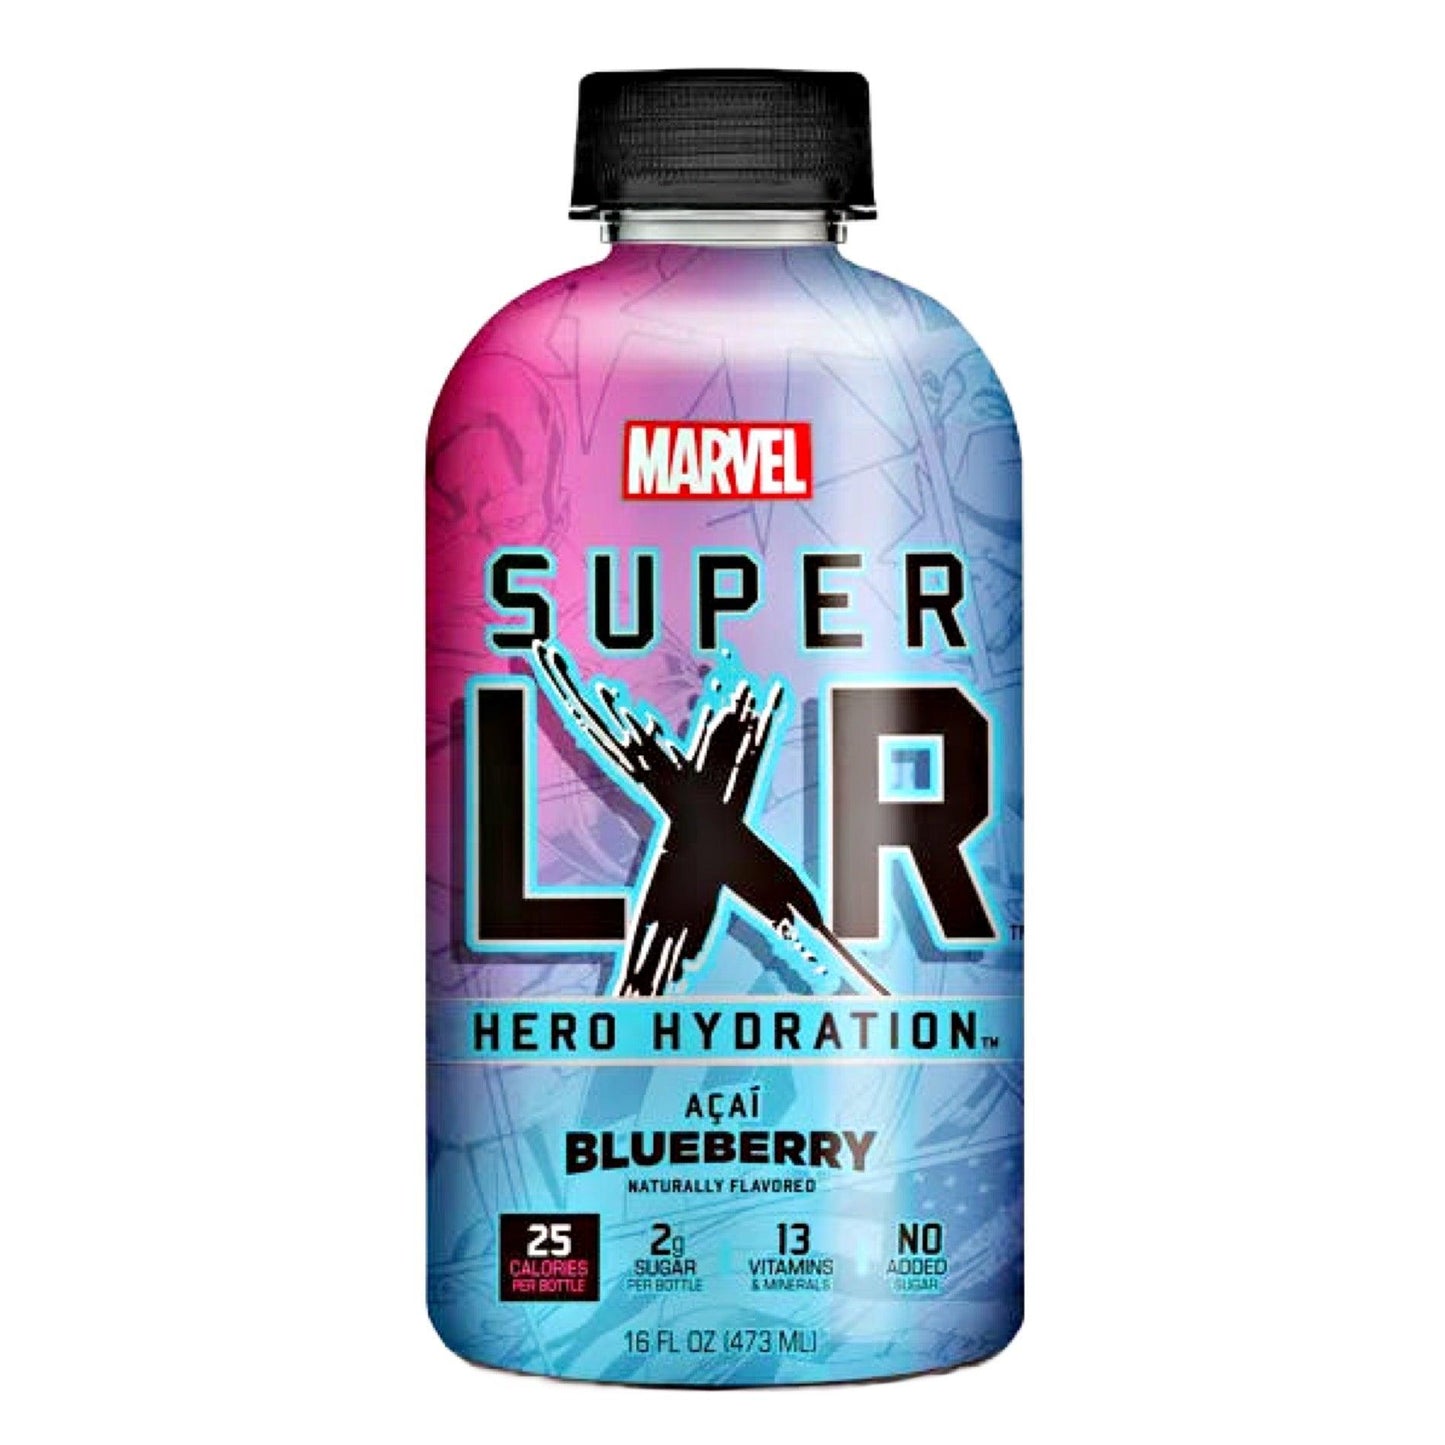 Marvel Super LXR Hero Hydration Blueberry 473ml - The Snacks Box - Asian Snacks Store - The Snacks Box - Korean Snack - Japanese Snack